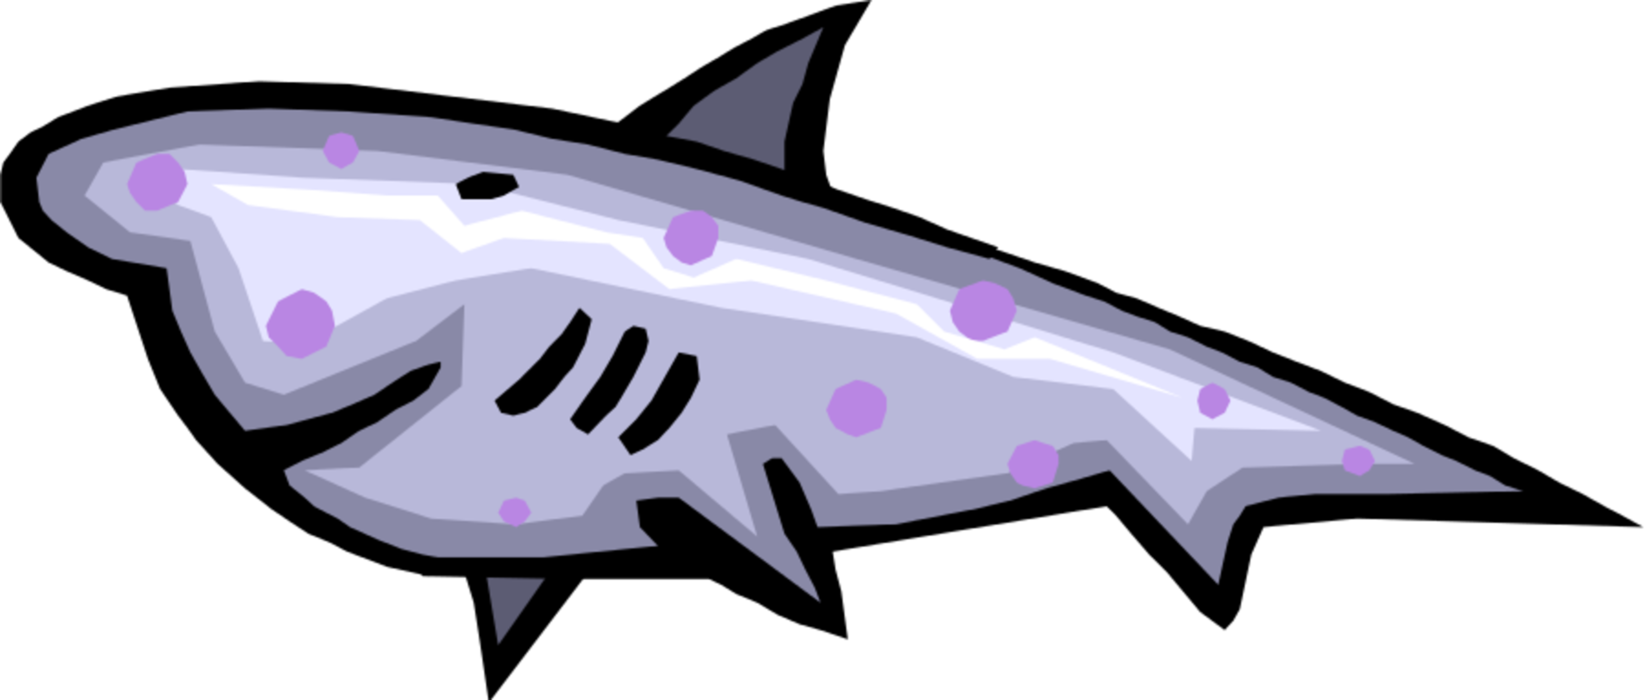 Vector Illustration of Marine Predator Shark with Pink Spots